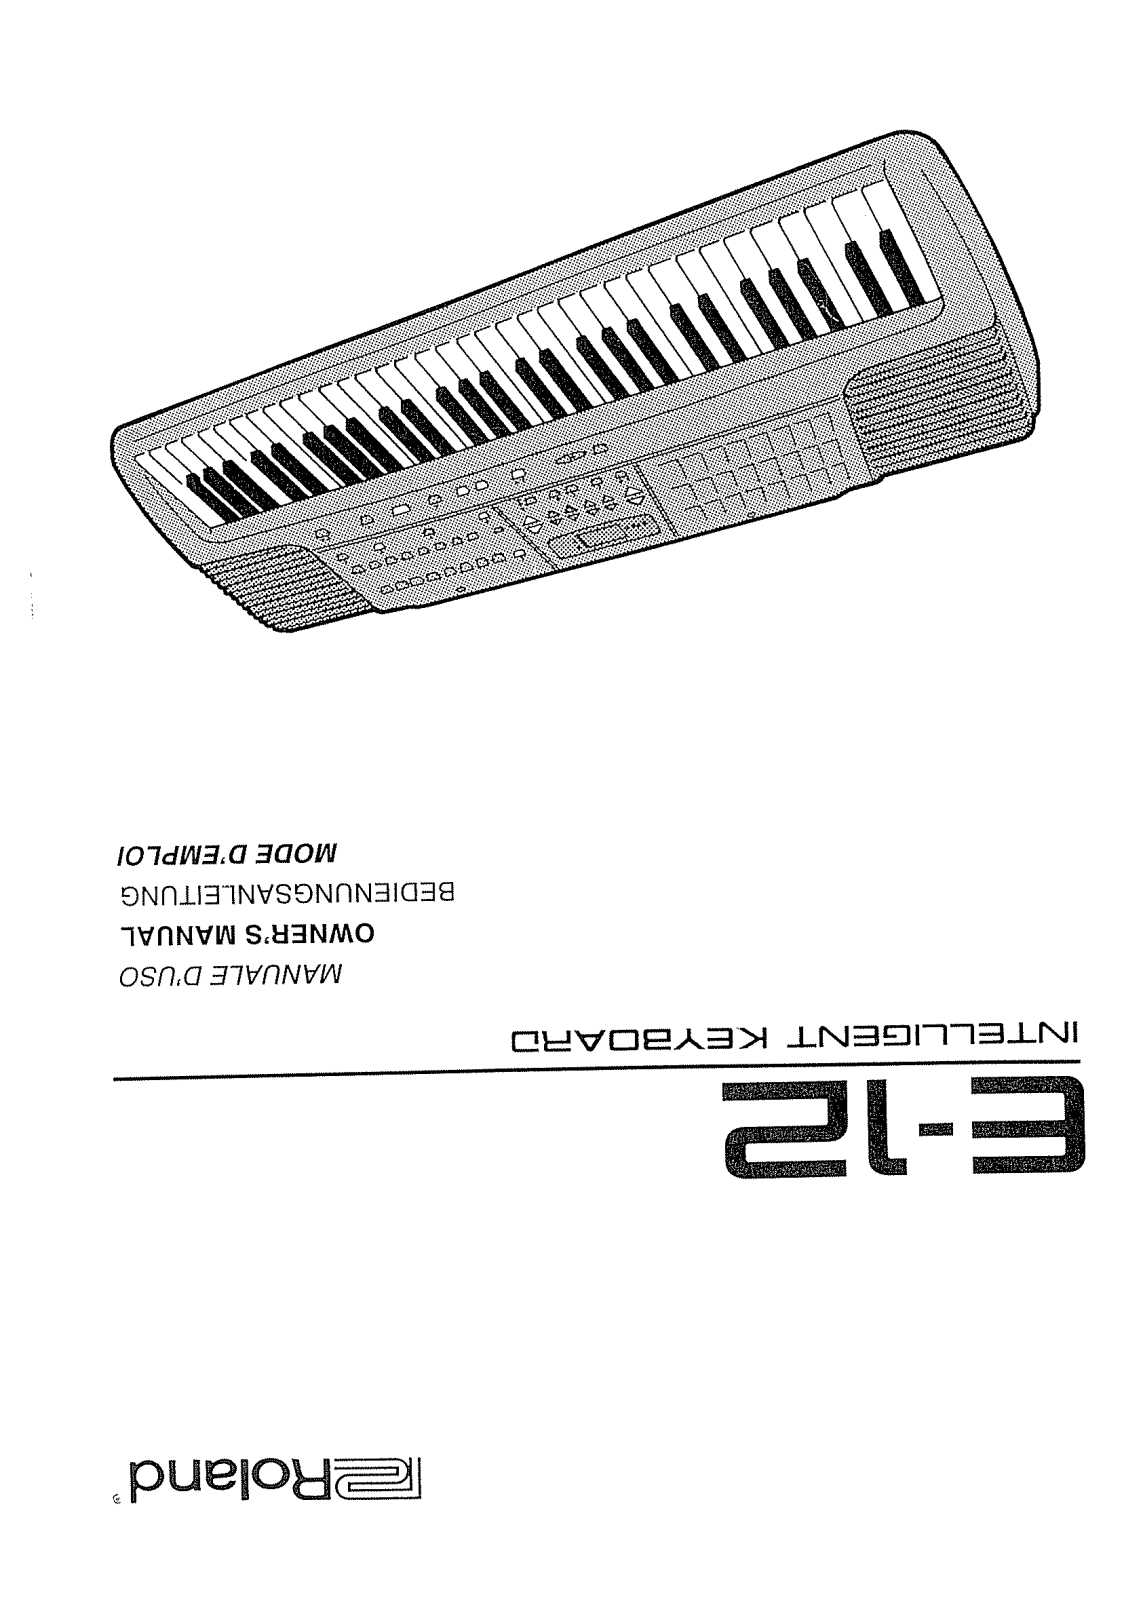 Roland E-12 Manual